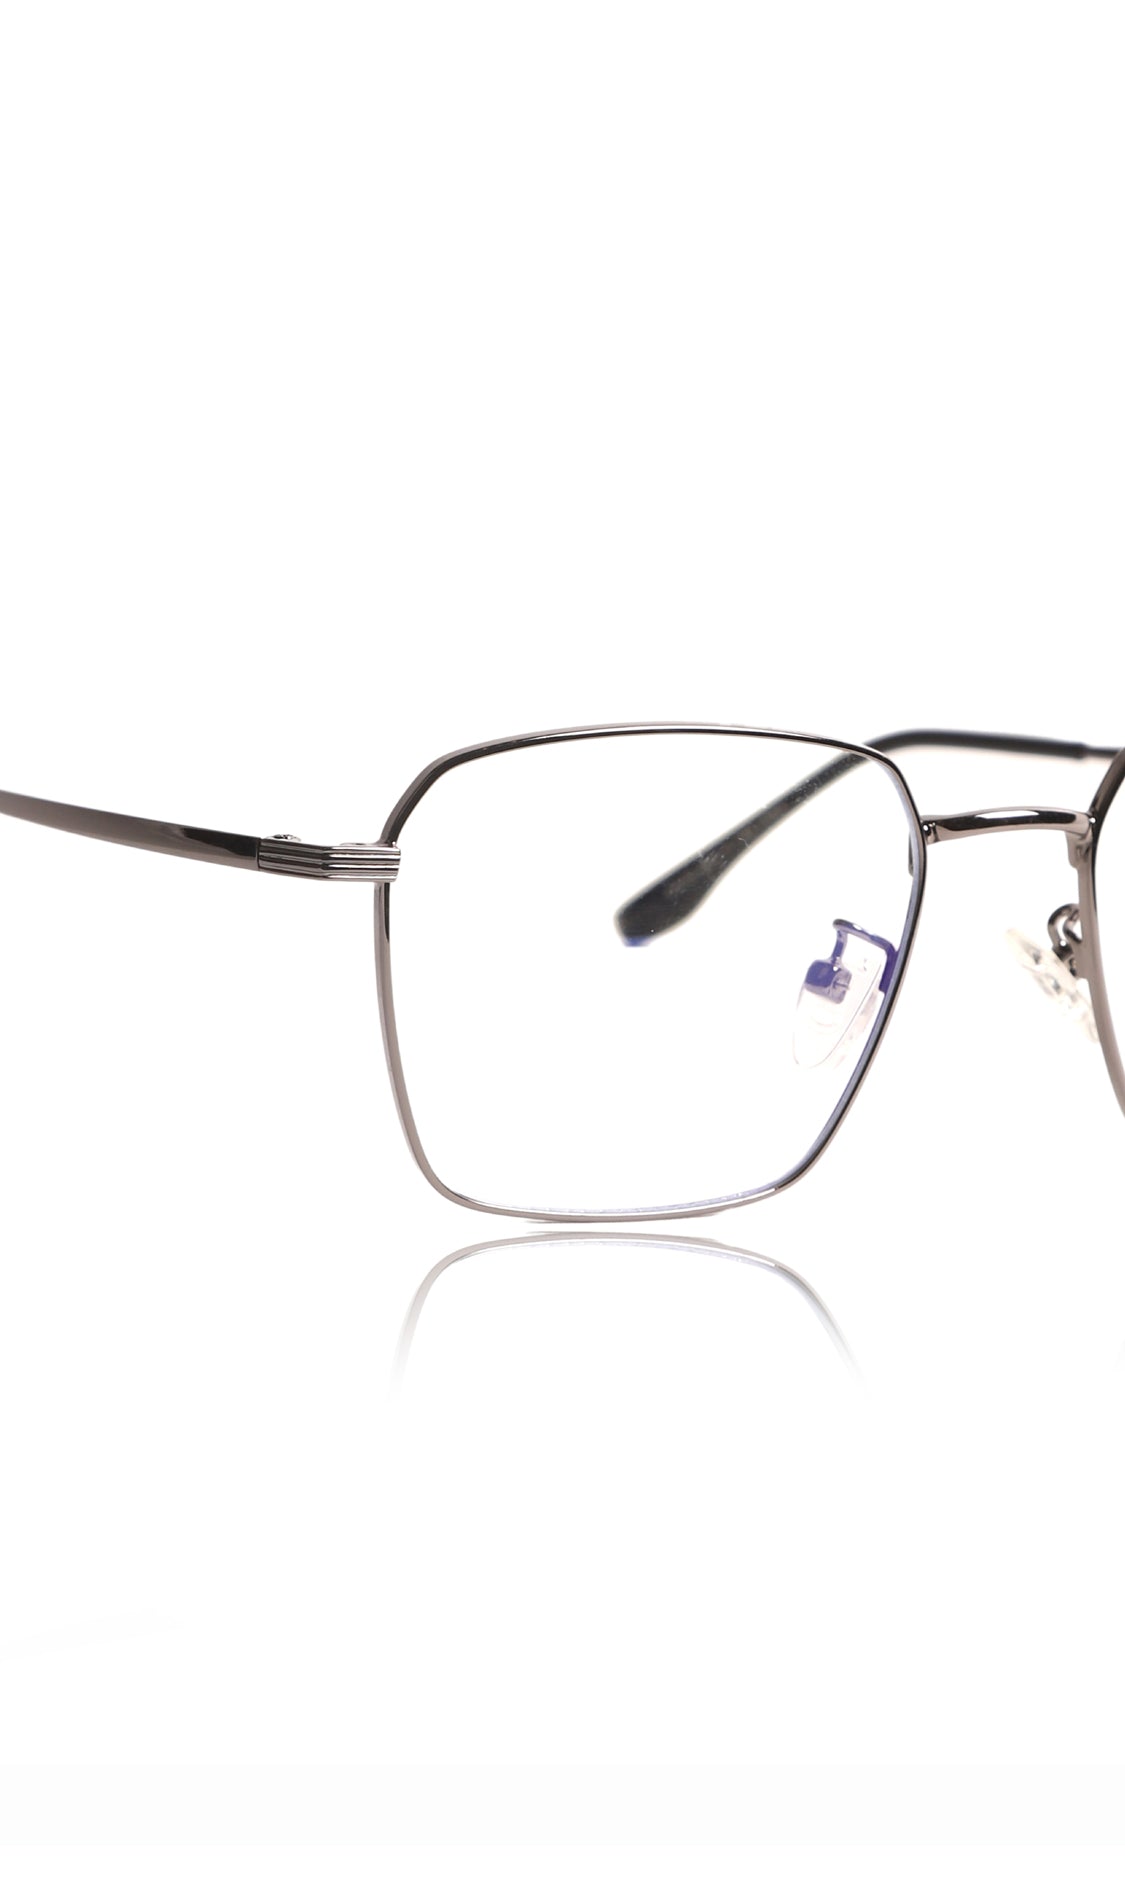 Jodykoes® Premium Series Metal Spectacle Frame With Anti-Glare Blue Light Blocking Eyeglasses for Men and Women | Computer and Mobile Phone Protection Eyewear Frames (Black/Grey)